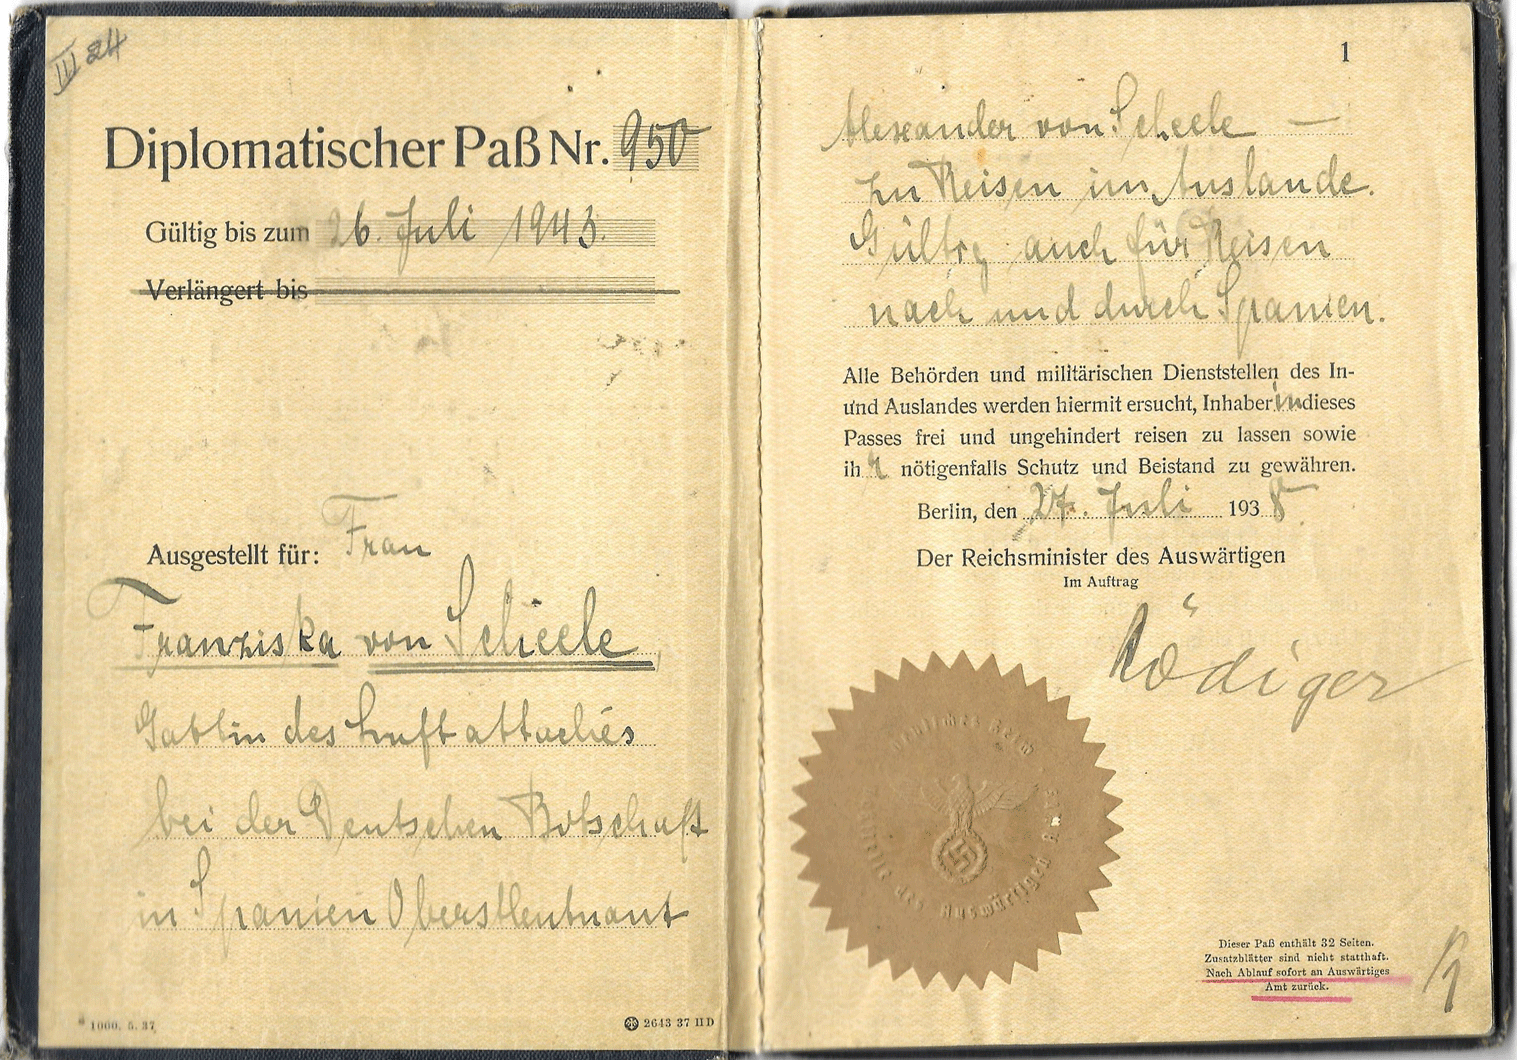 WW2 German Diplomatenpass